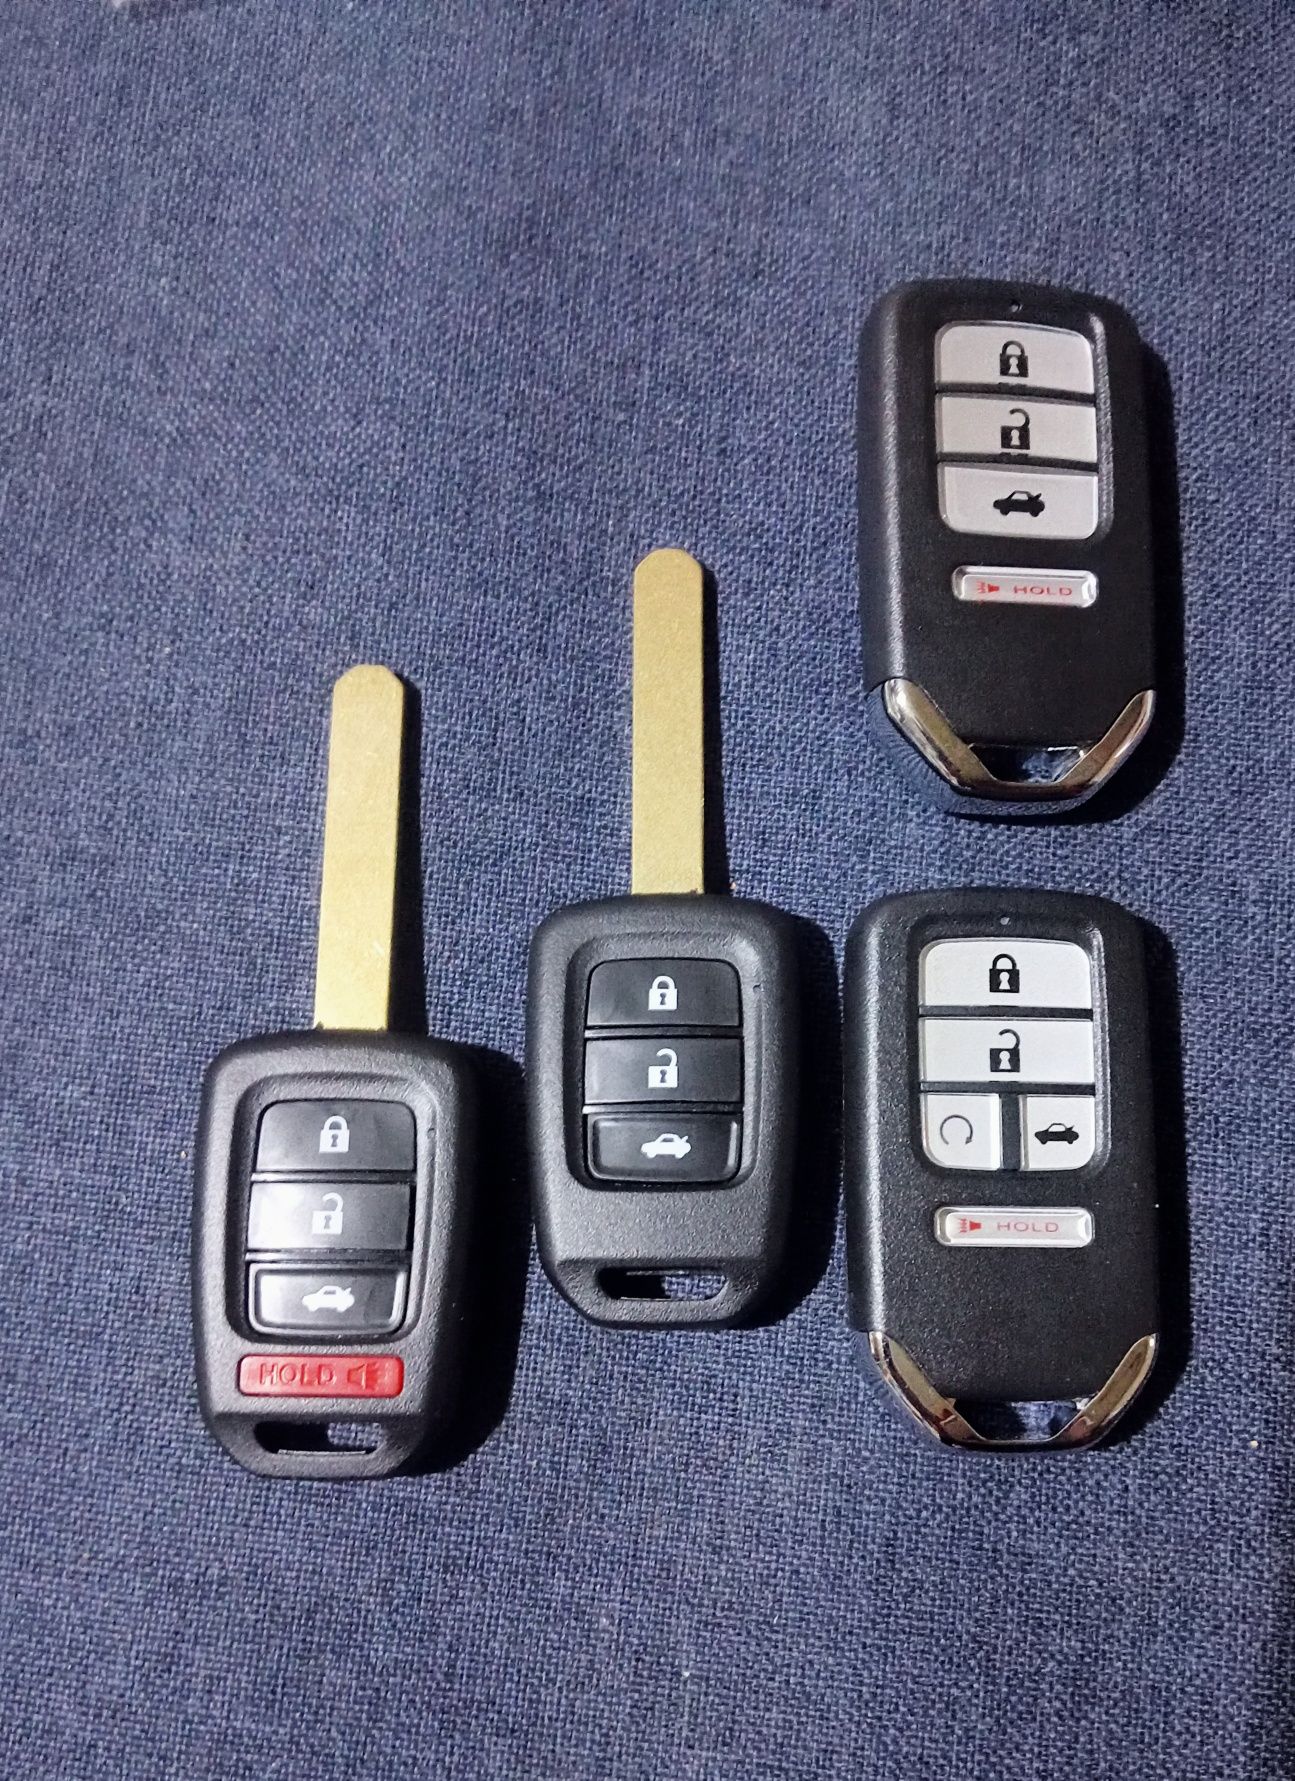 Ключи Honda civic, c-rv, привязка к авто.